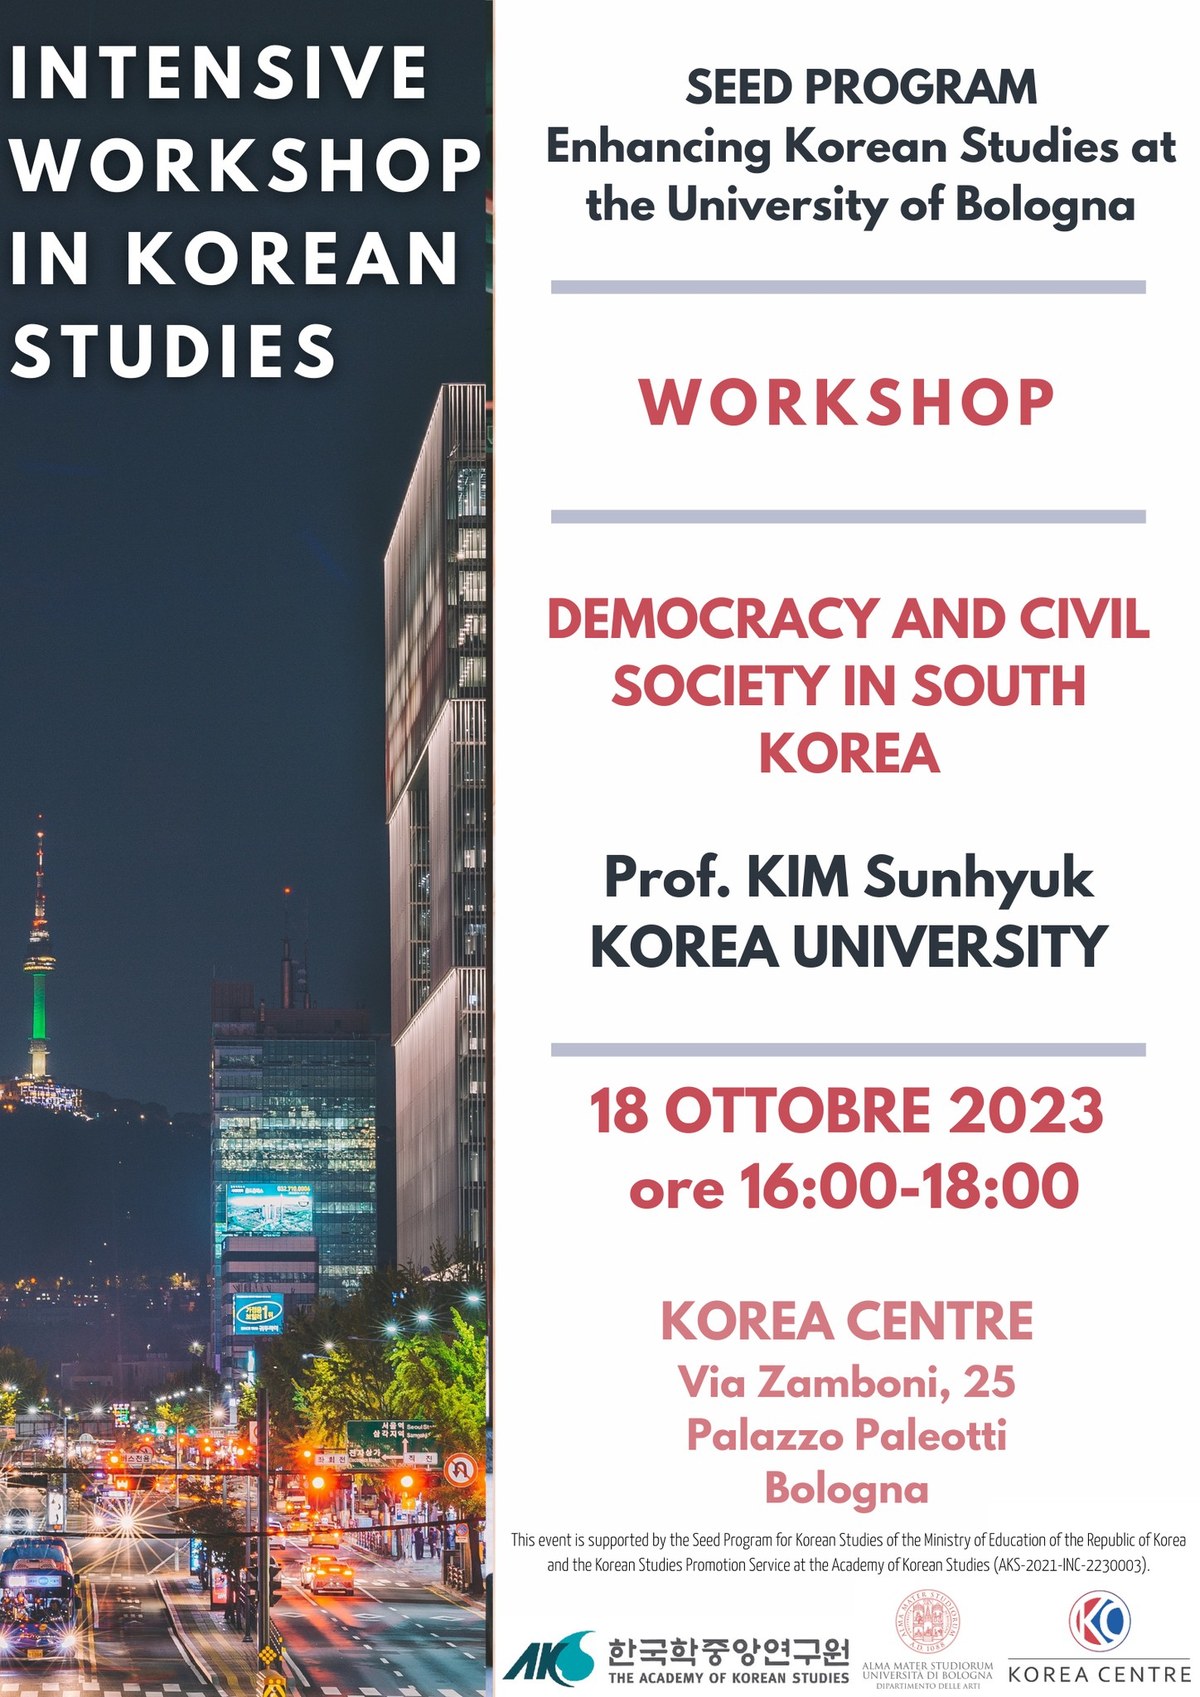 INTENSIVE WORKSHOP IN KOREAN STUDIES: "Democracy and Civil Society in South Korea"